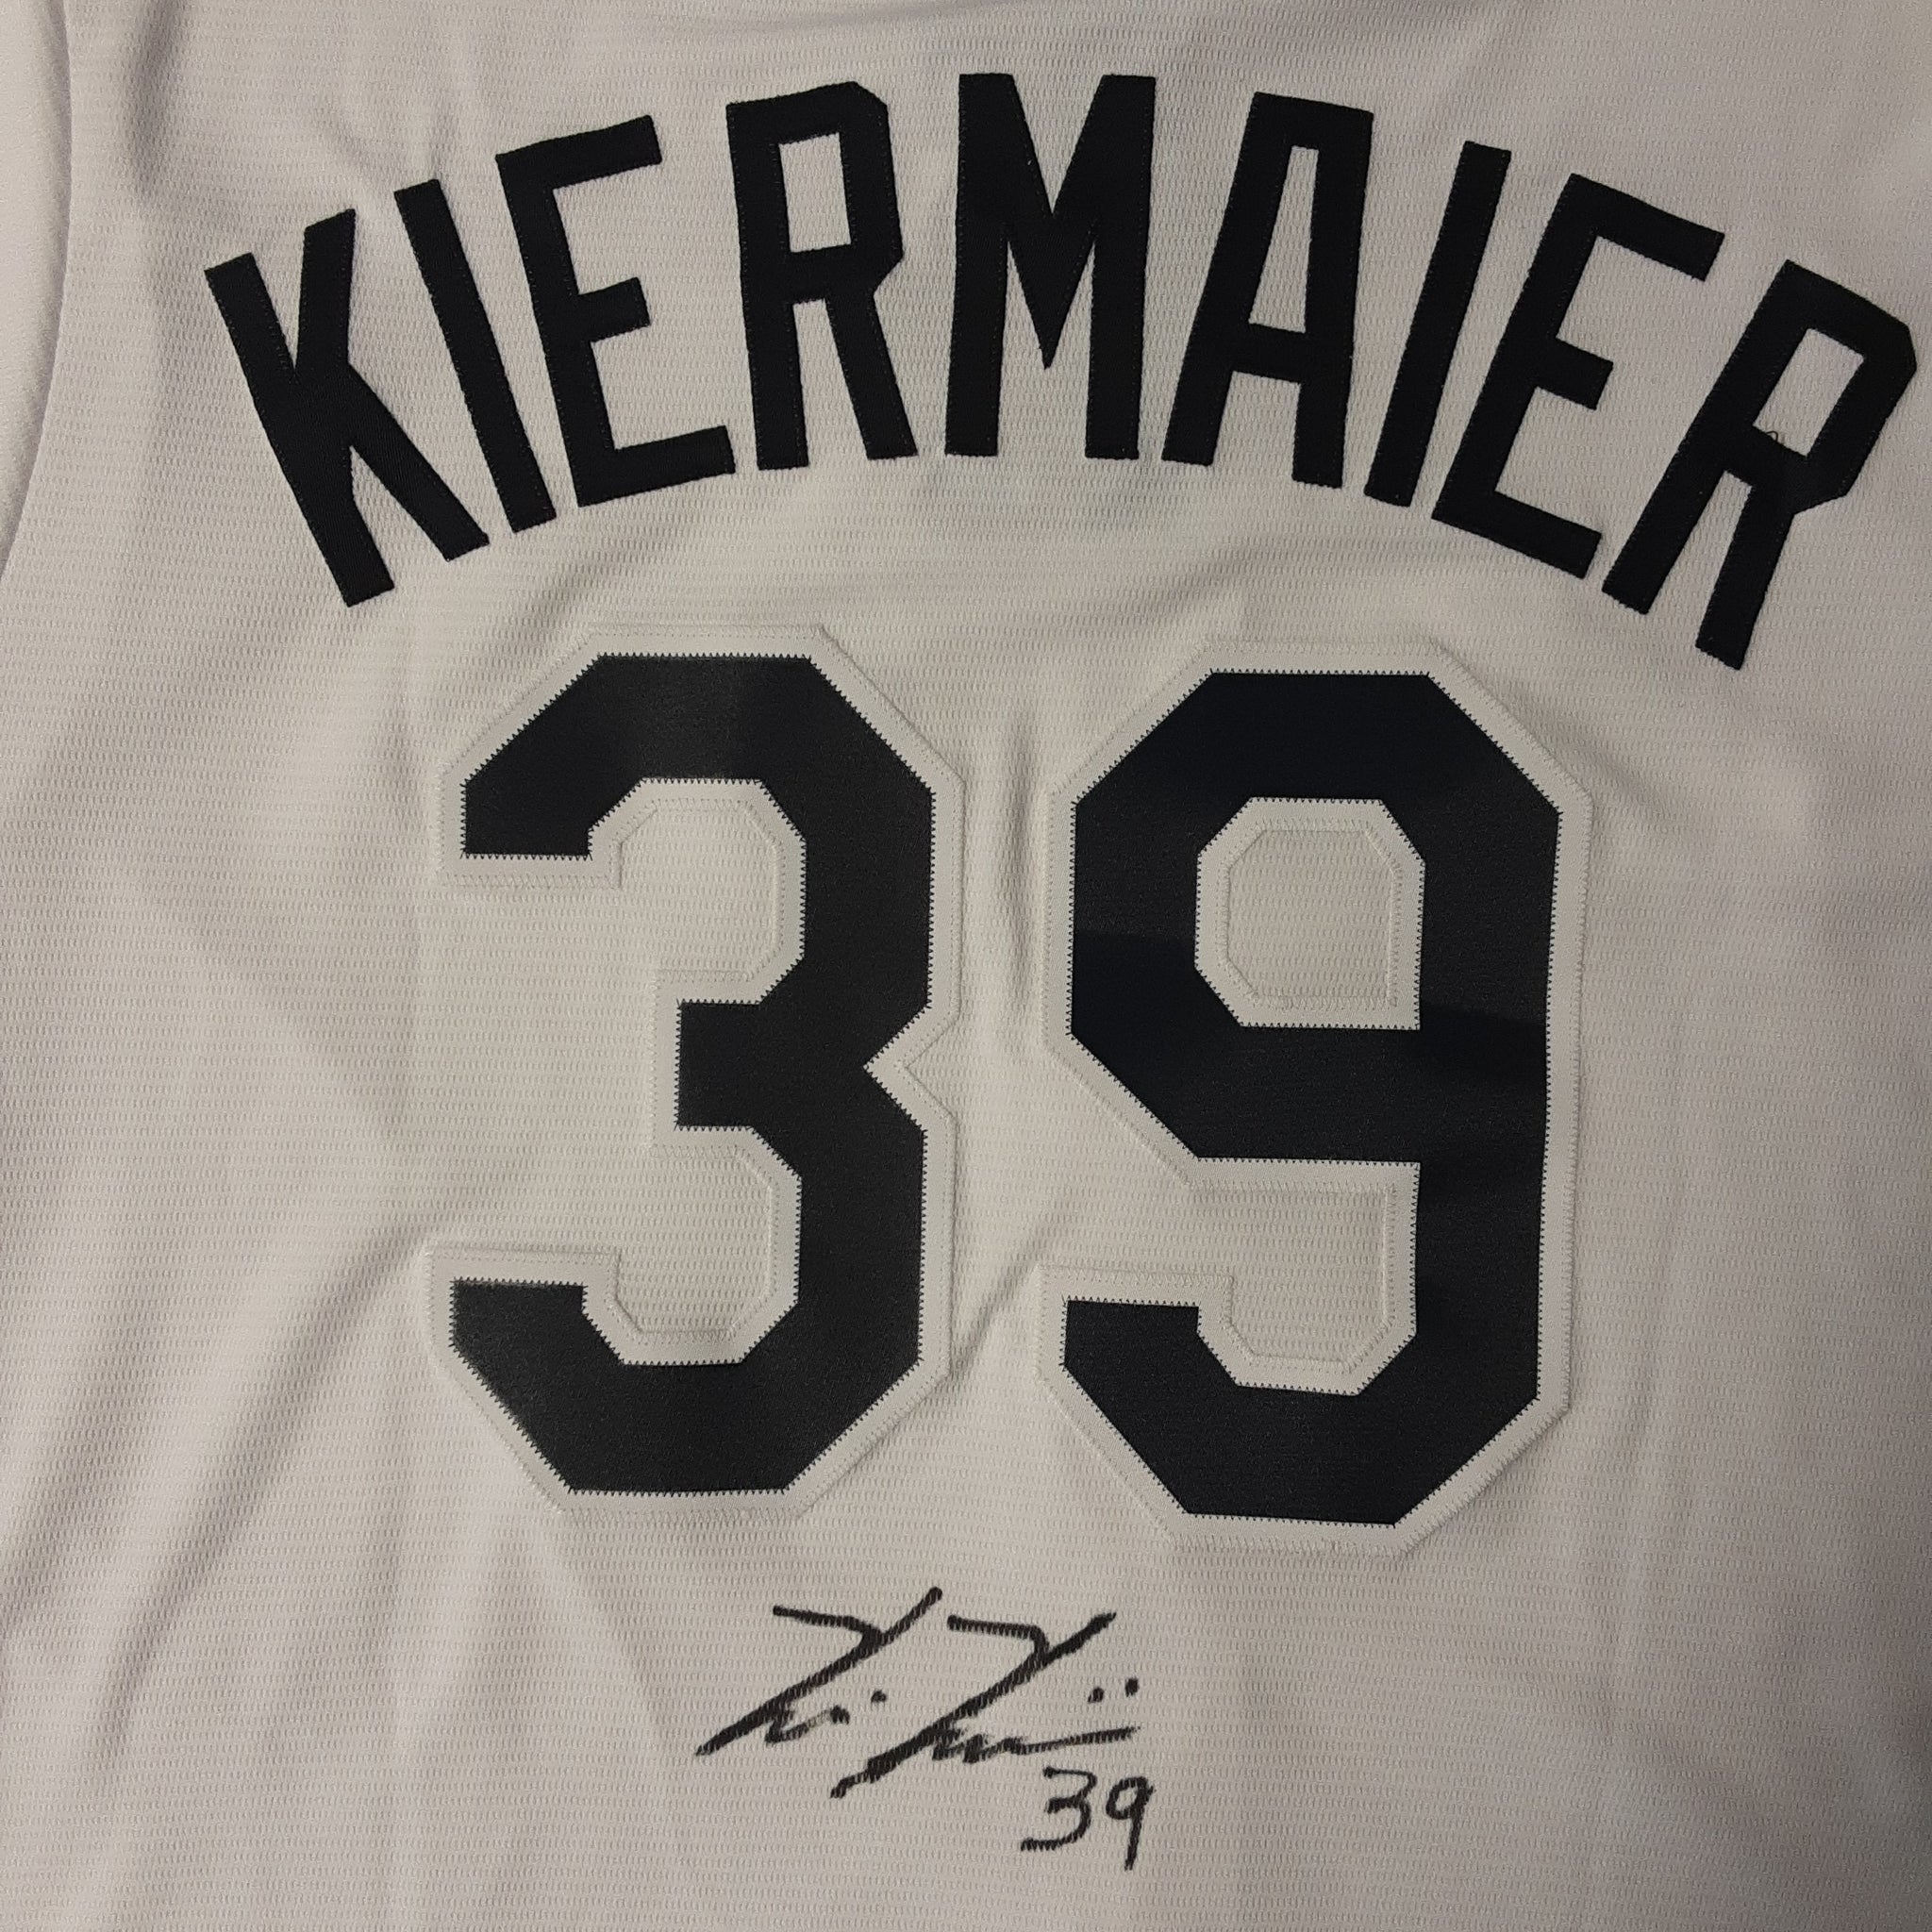 Kevin Kiermaier Authentic Signed Pro Style Jersey Autographed JSA